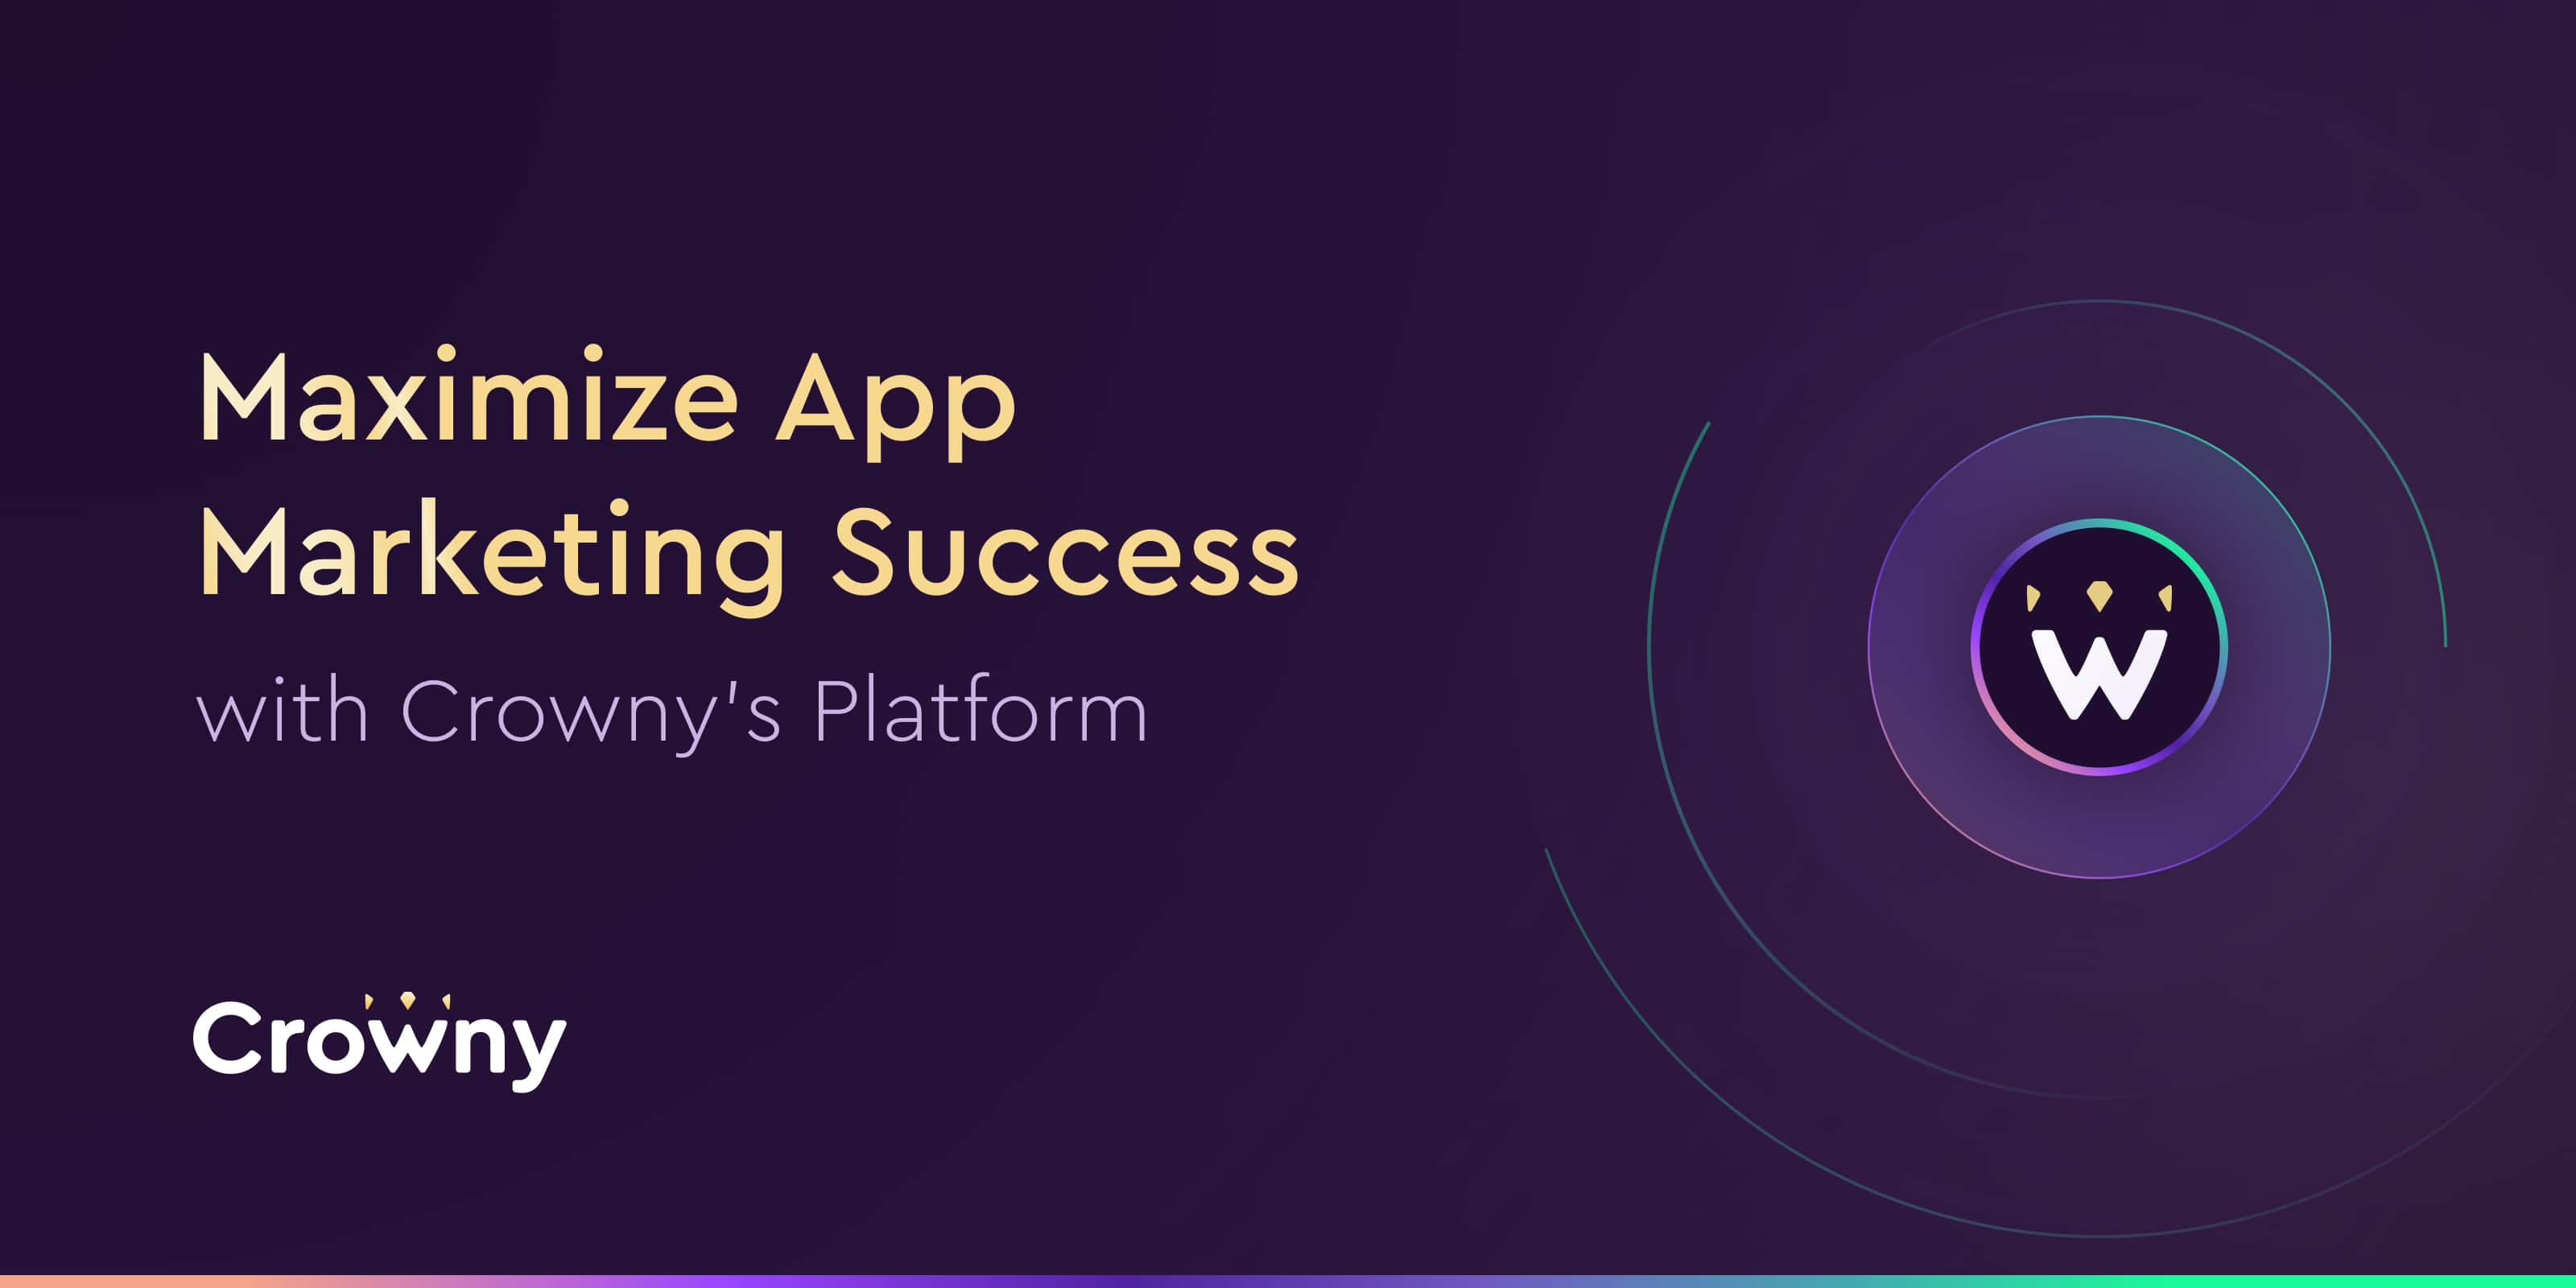 App Marketing with Crowny's Platform